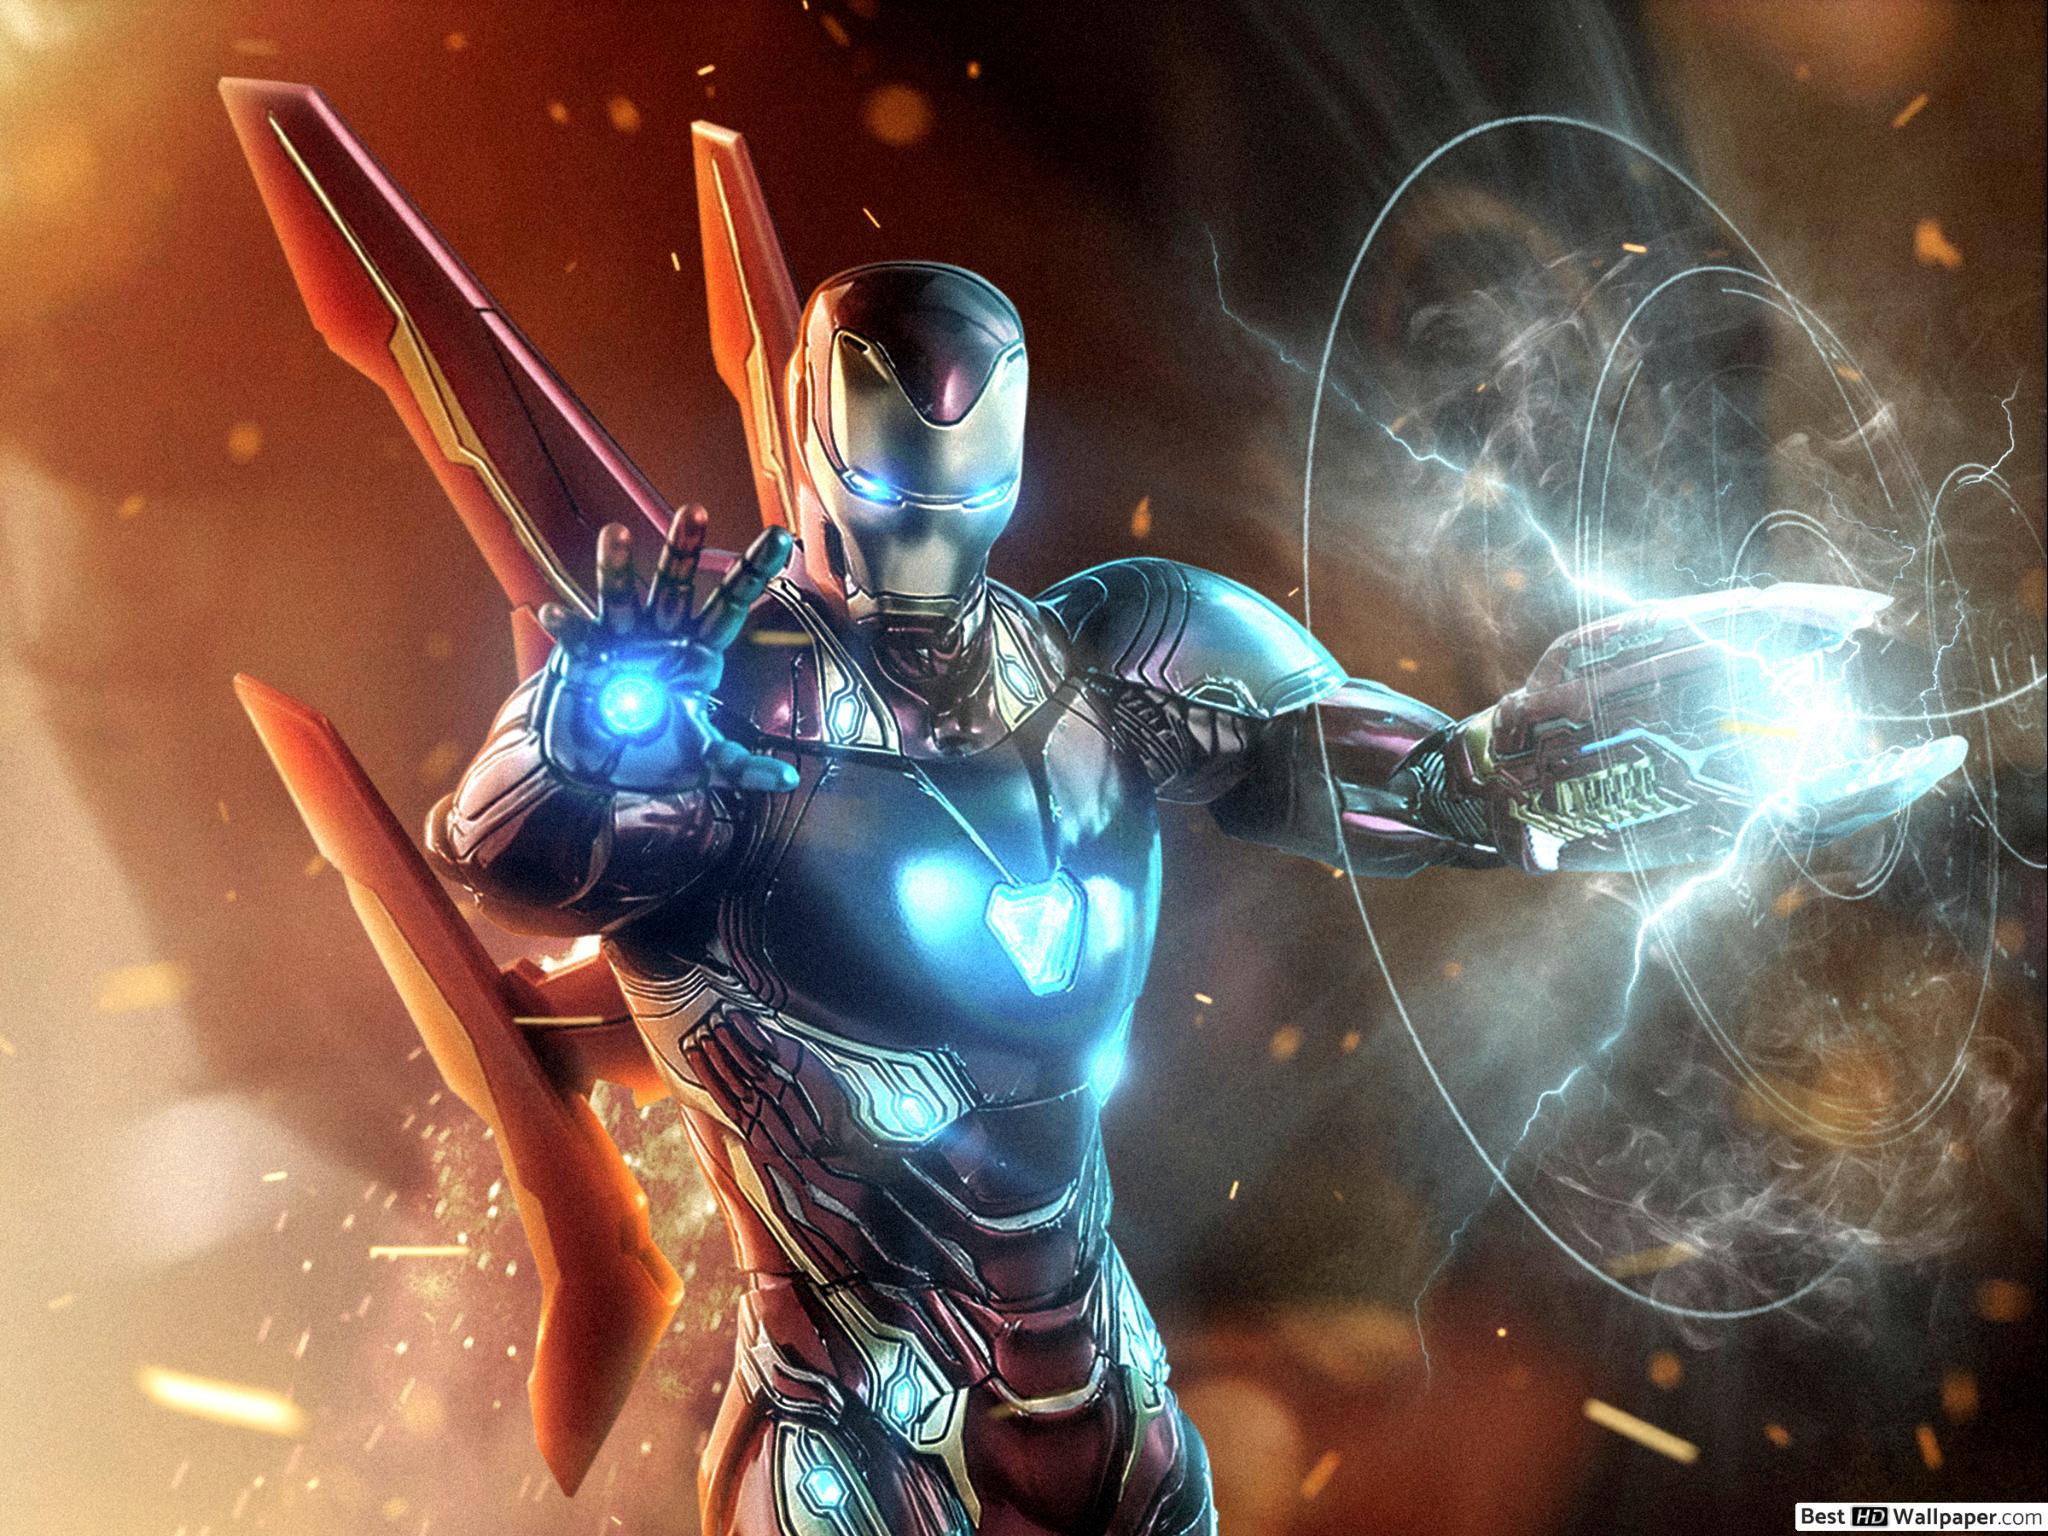 Avengers: Endgame aiming laser beam HD wallpaper download